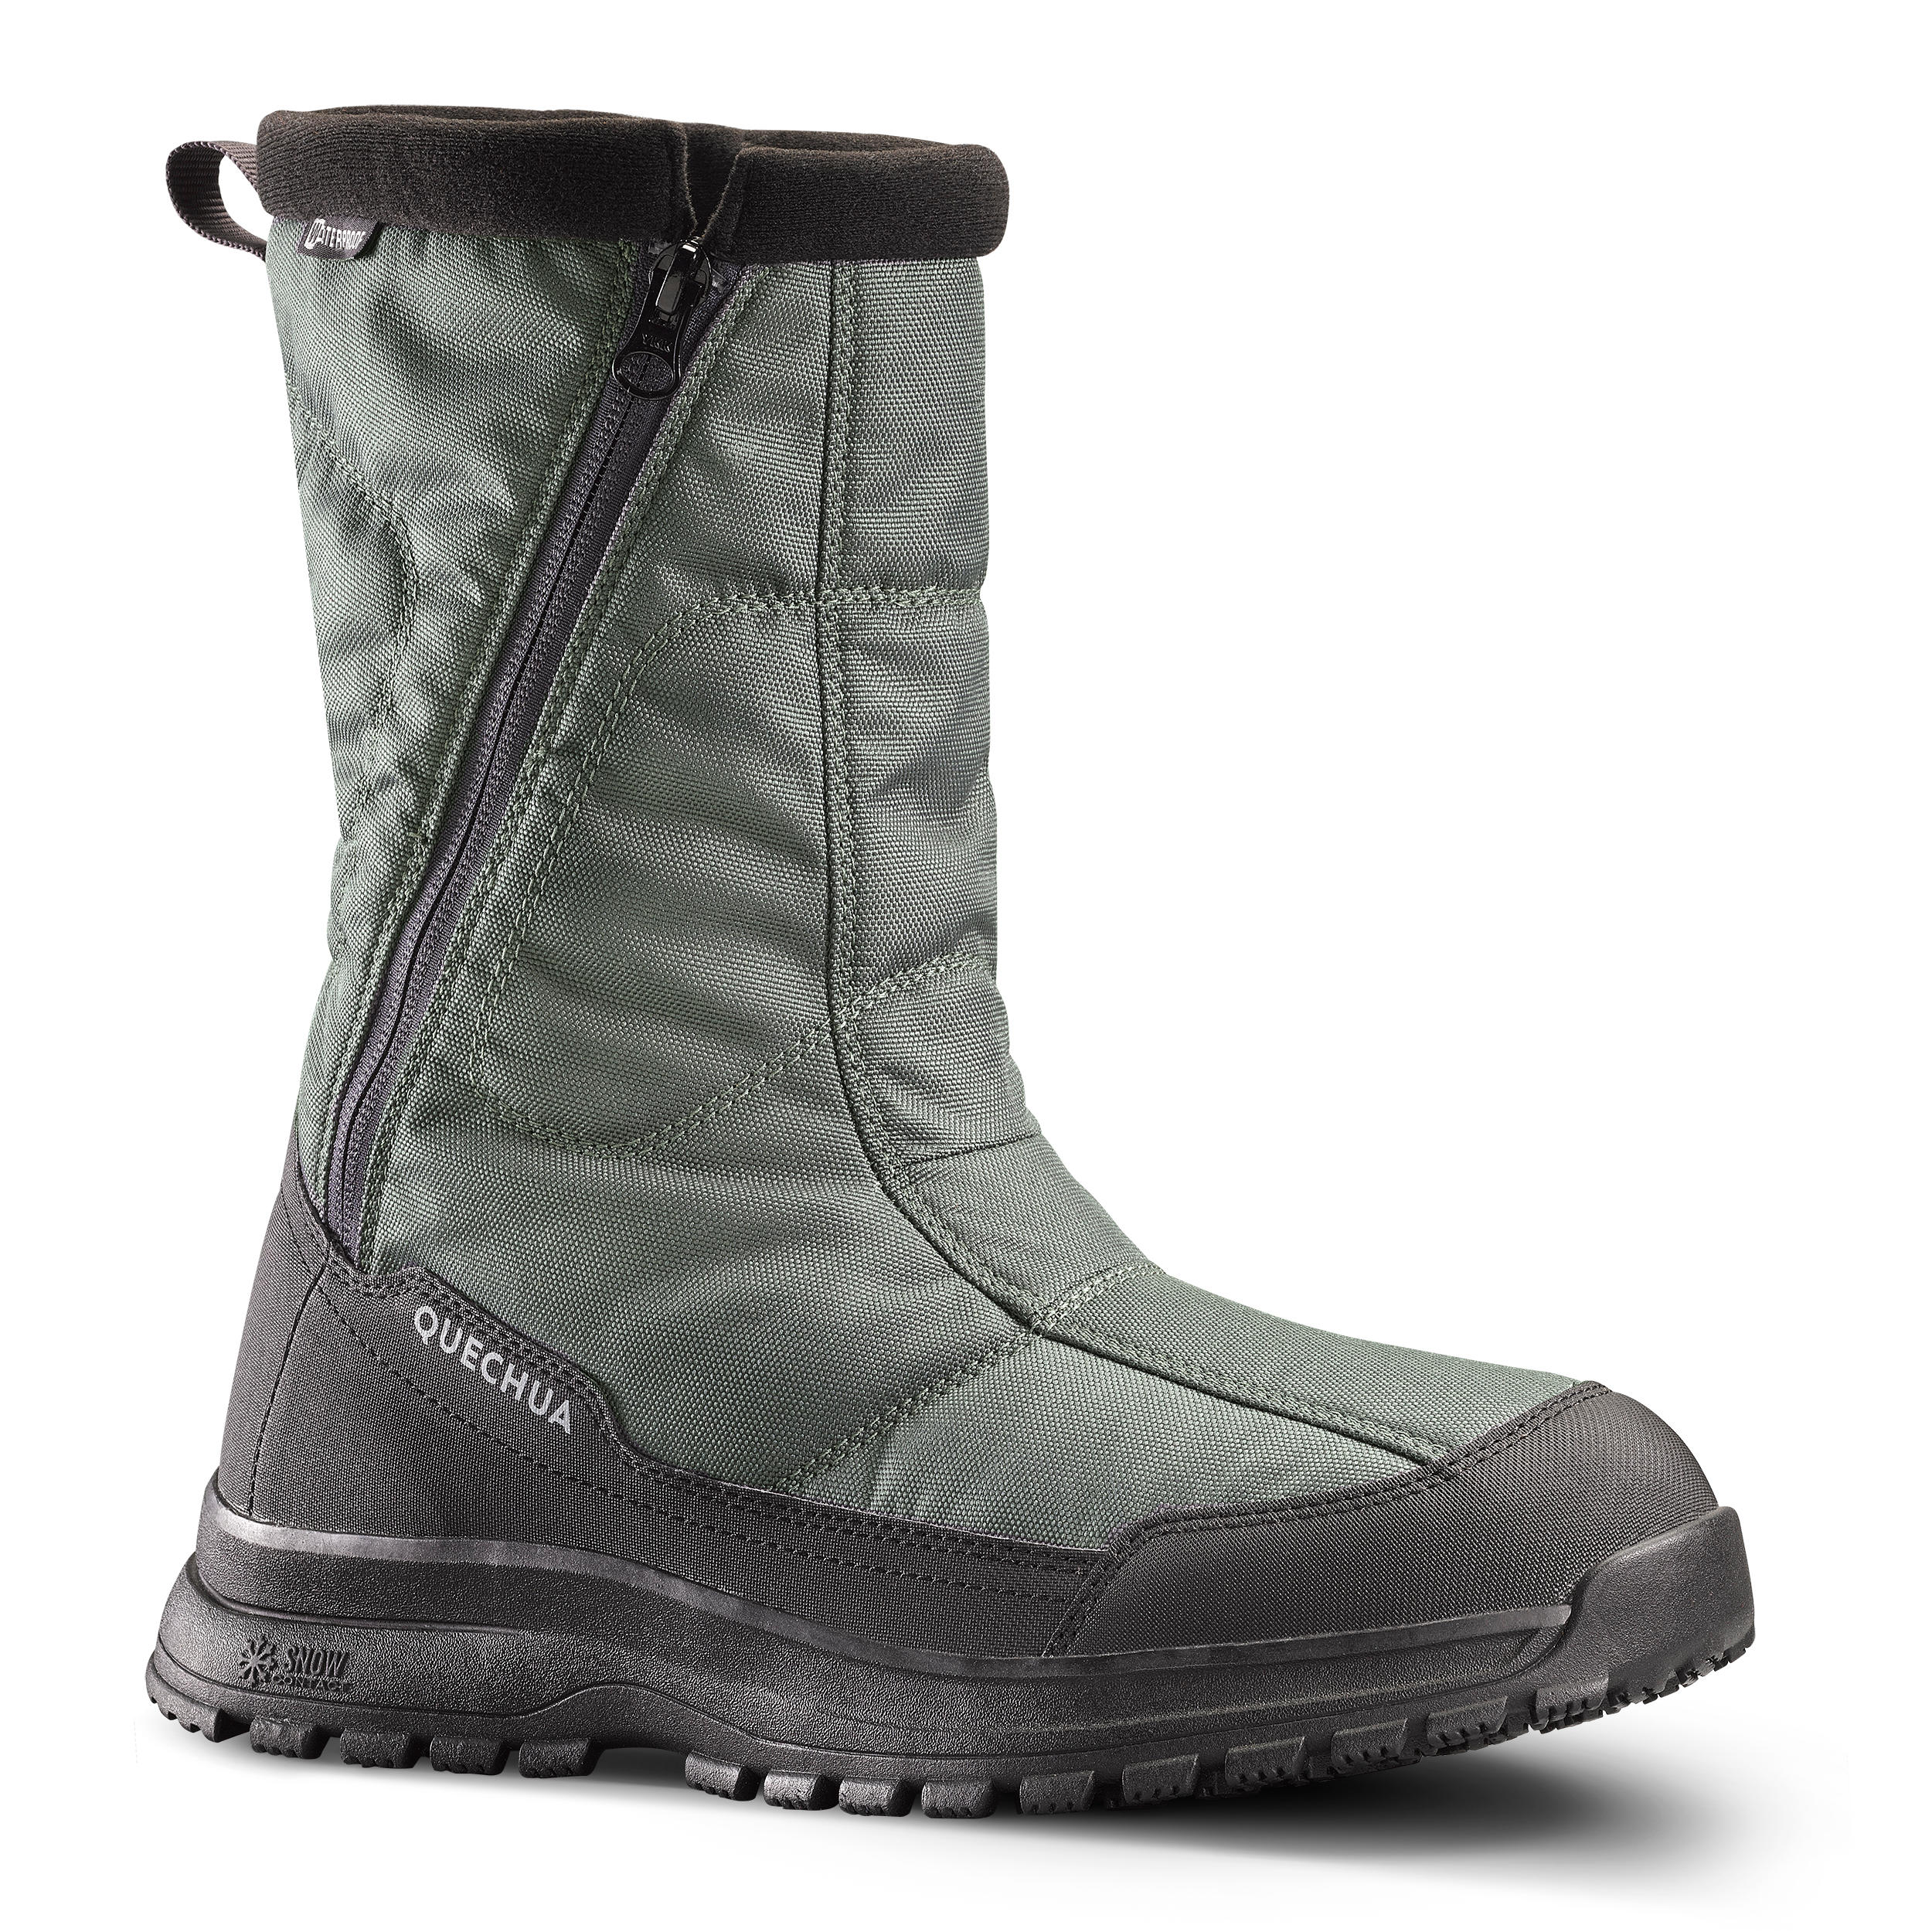 QUECHUA Men's warm waterproof snow hiking boots  - SH100 Zip